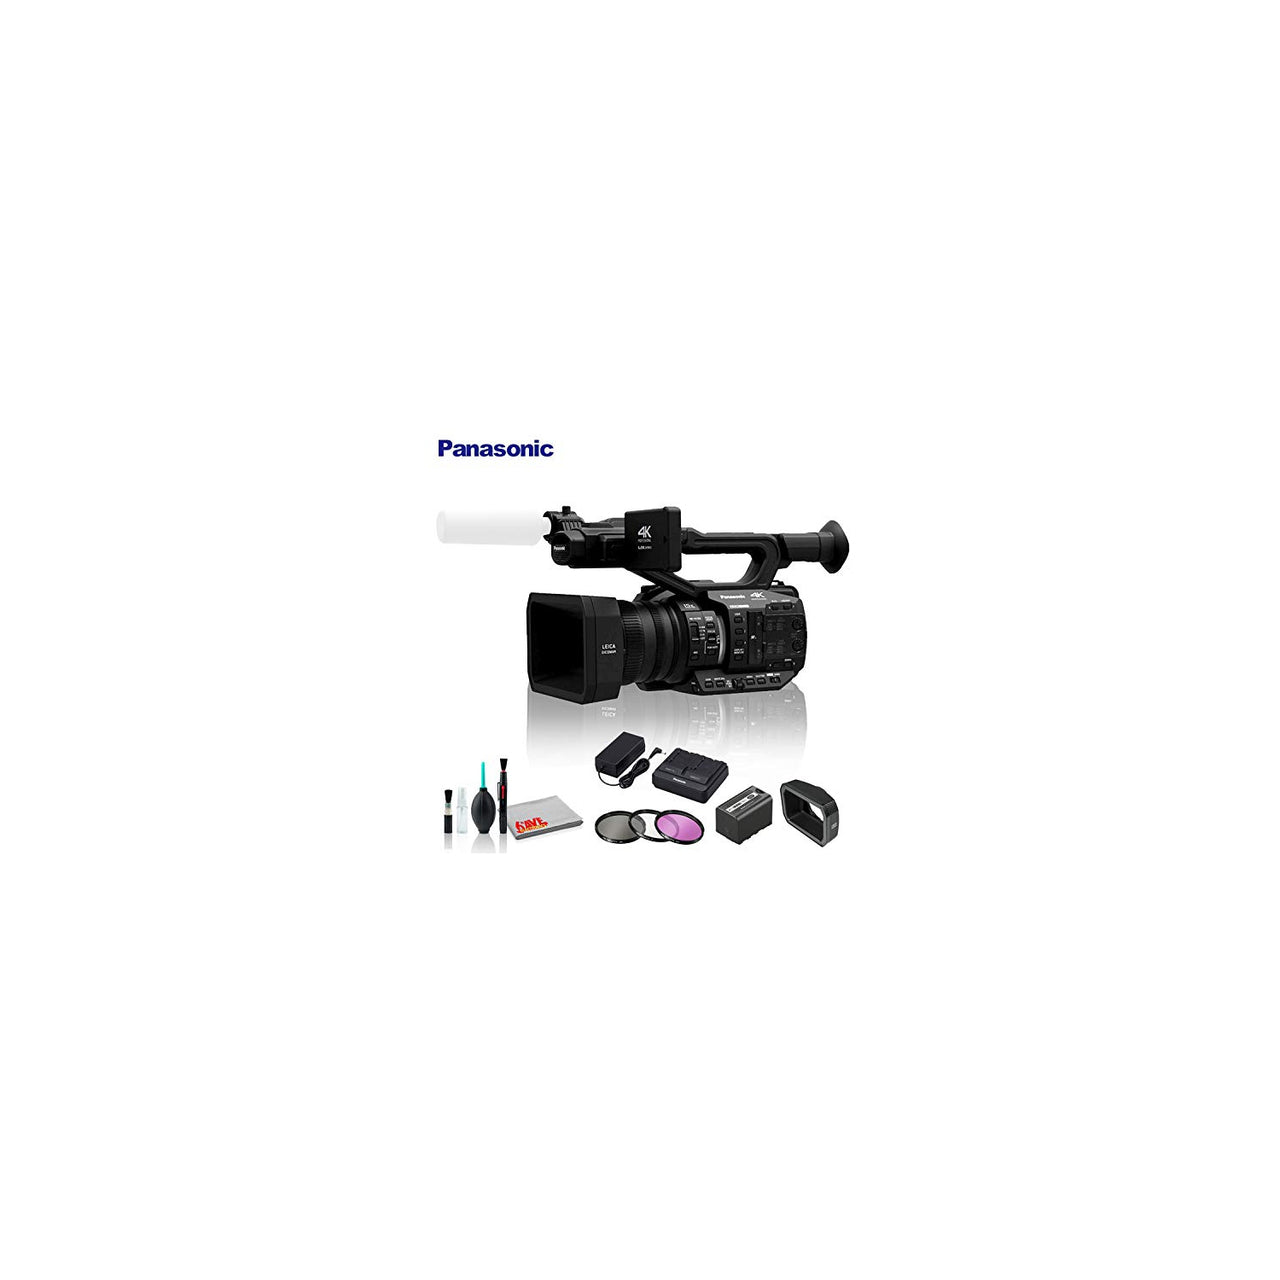 Panasonic AG-UX90 4K/HD Professional Camcorder Basic Bundle